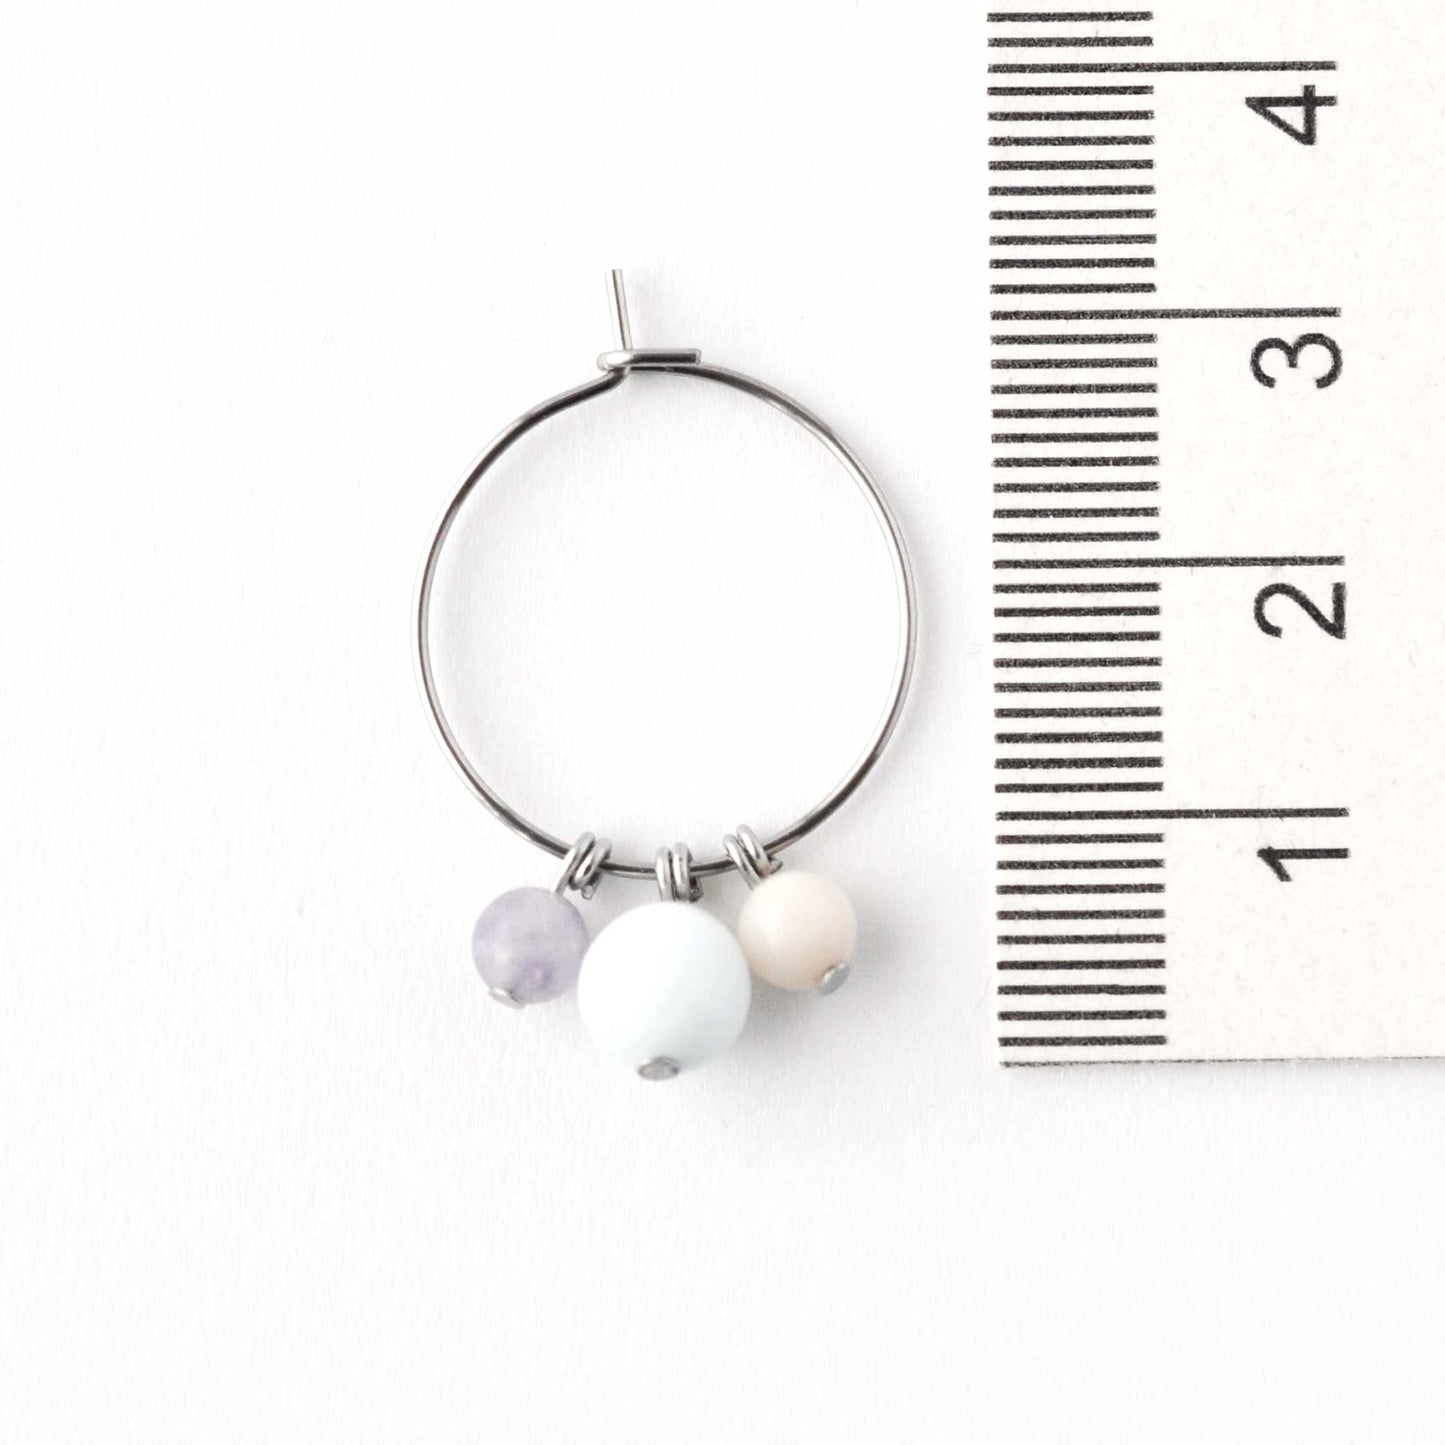 2cm diameter surgical steel hoop earring with pastel gemstone beads next to ruler